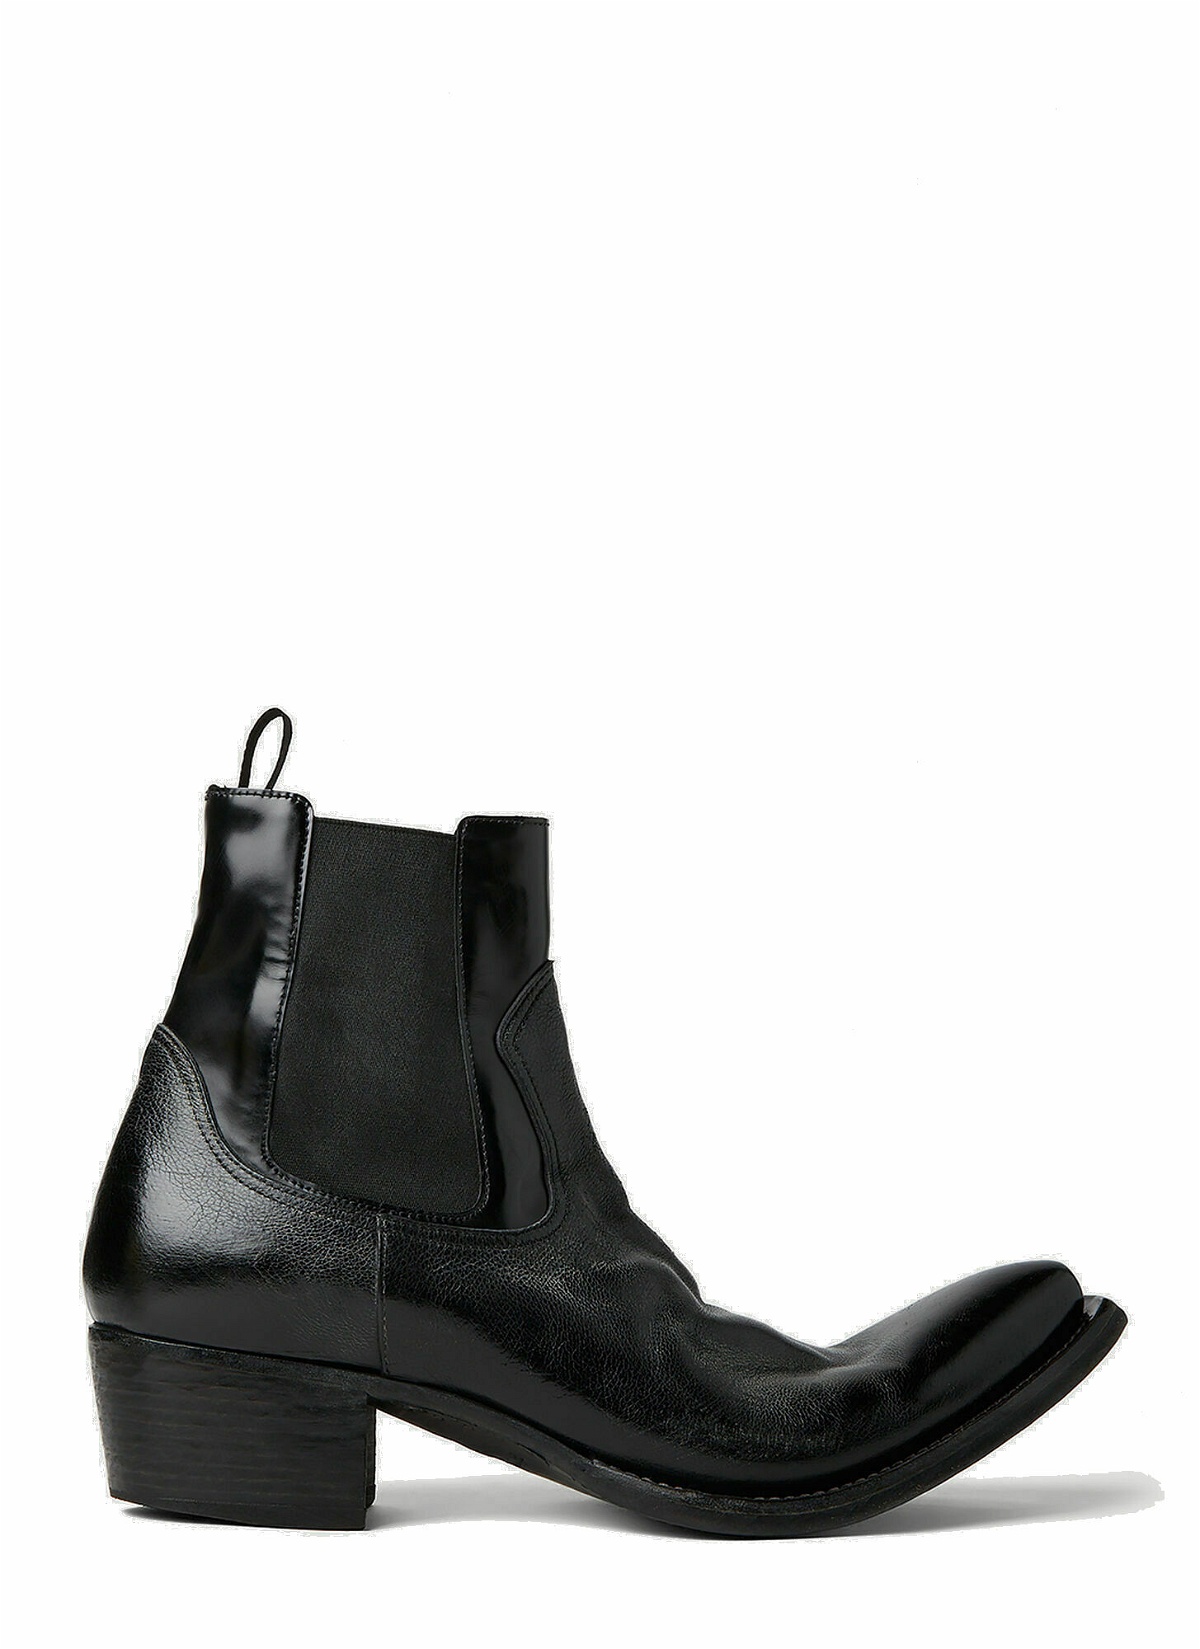 Photo: Prada - Turn-Up Toe Cowboy Boots in Black